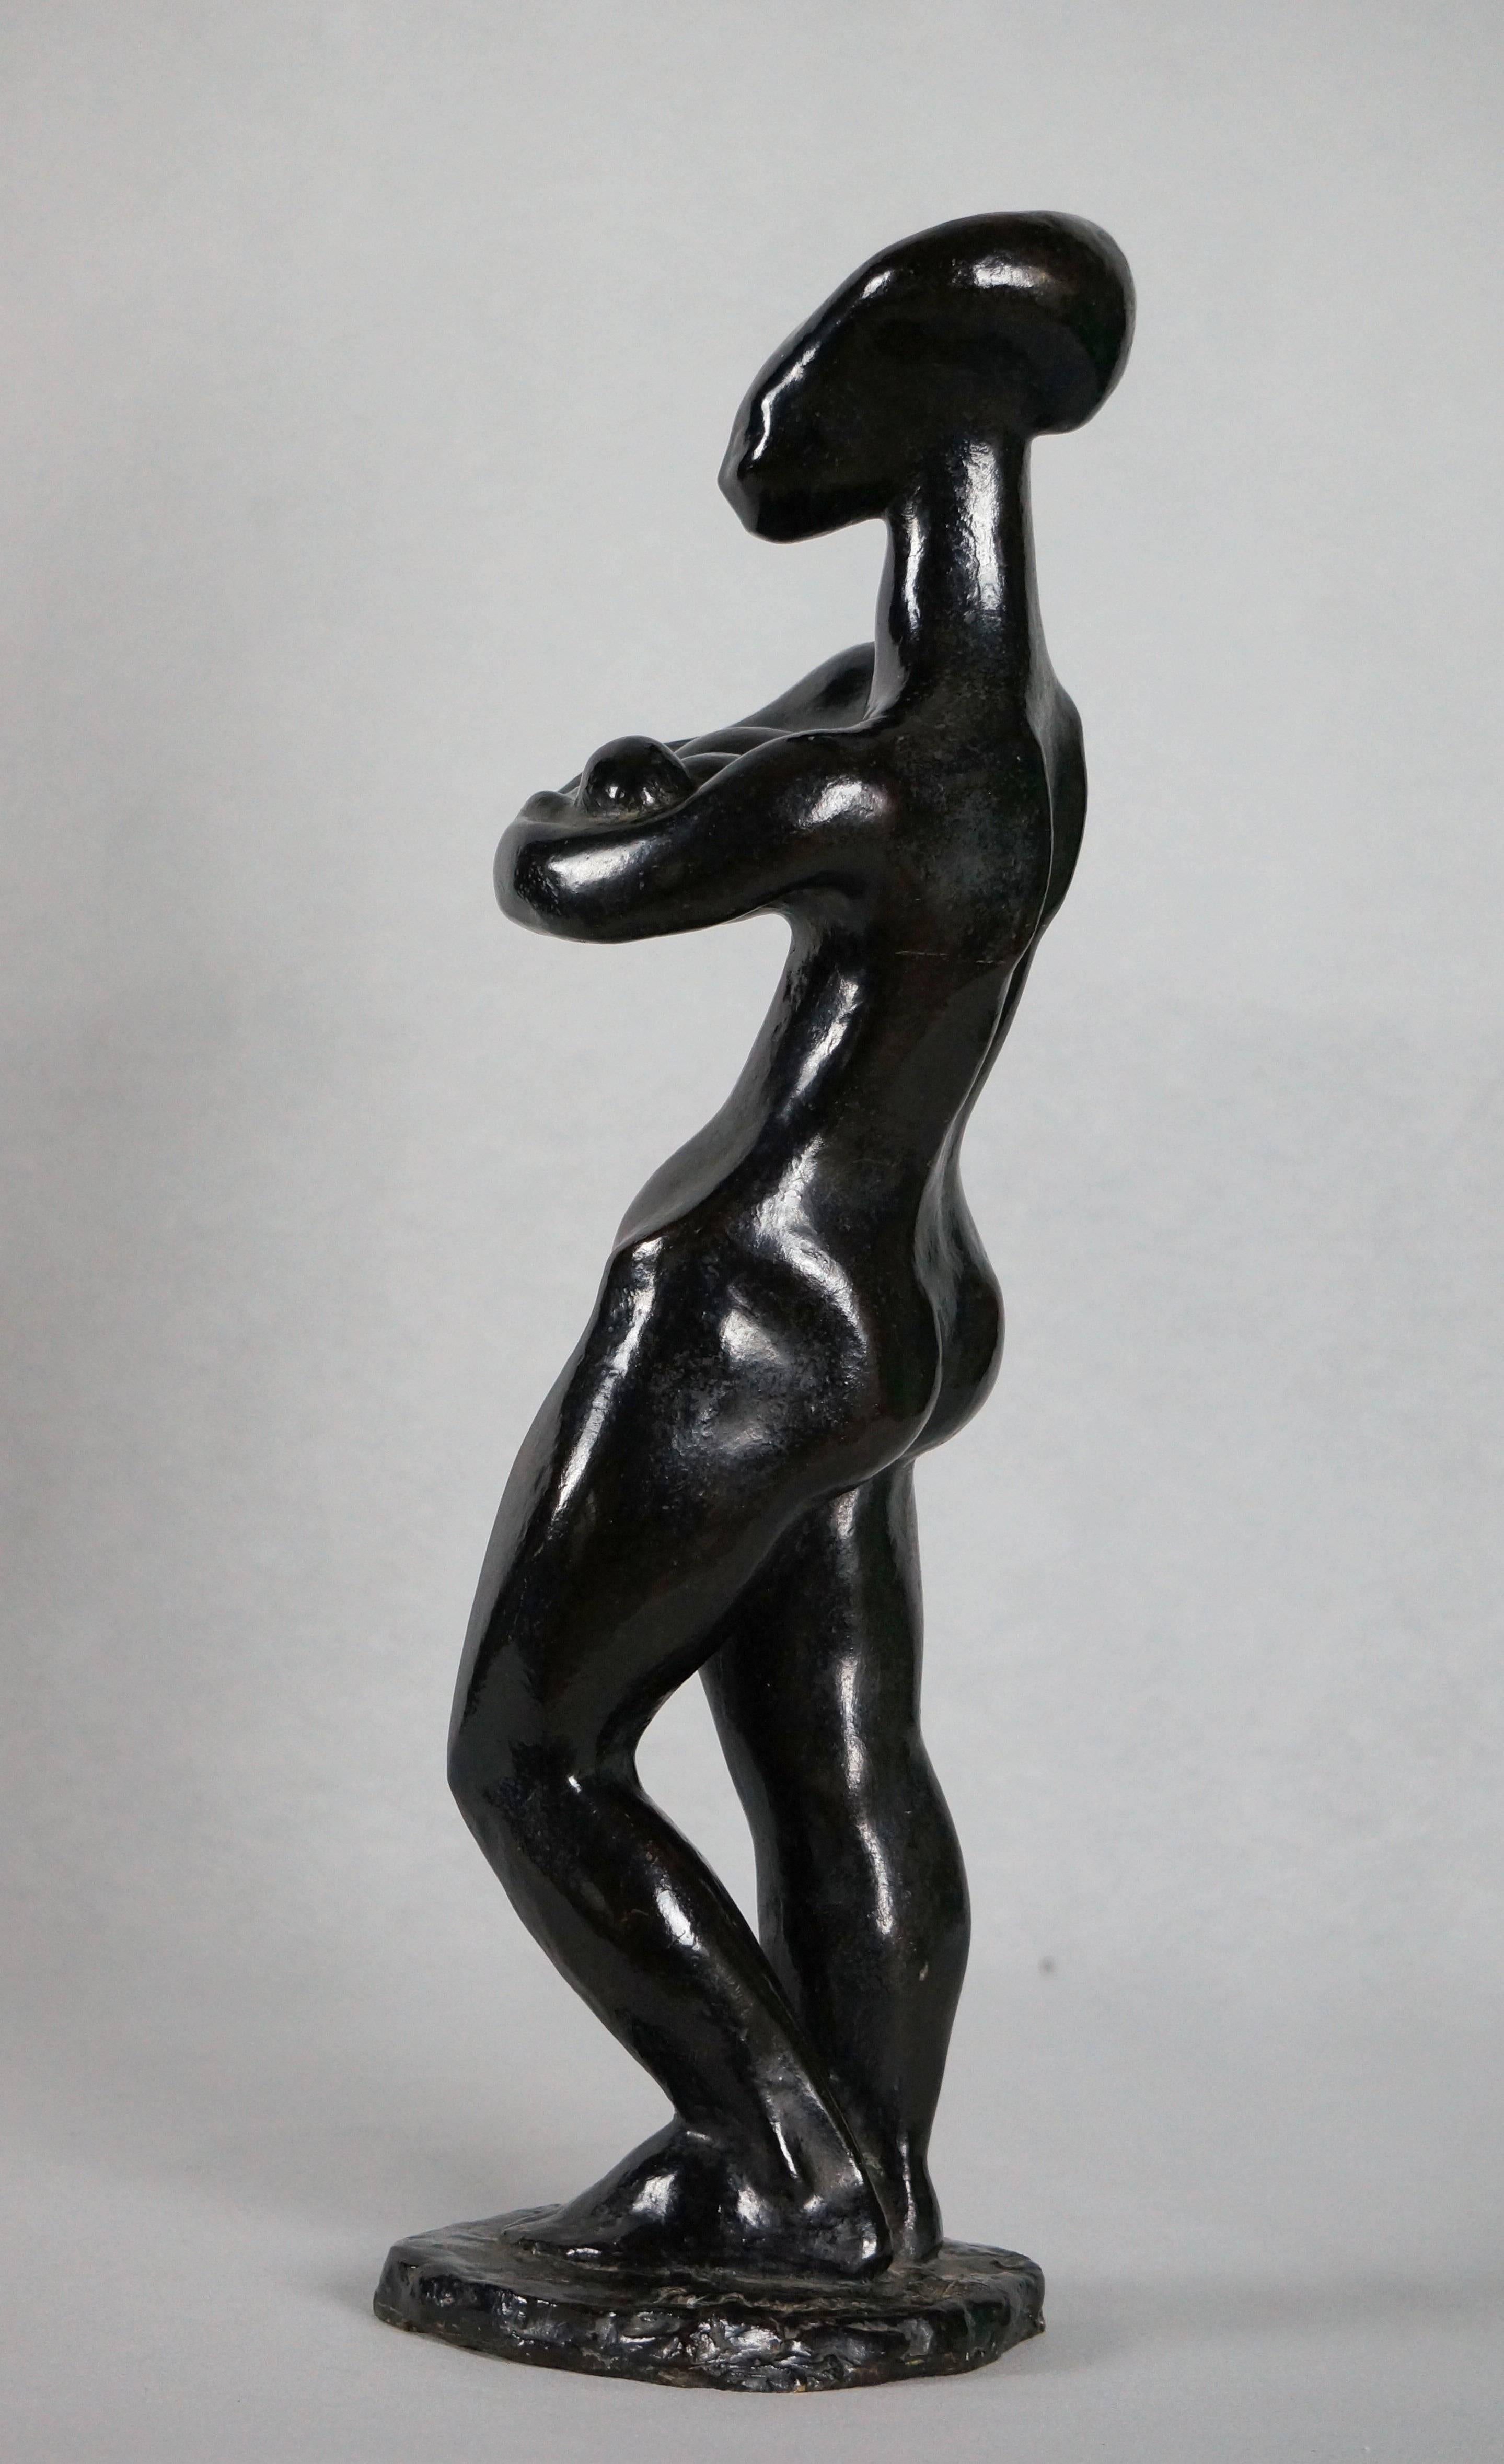 Maternity, 1960-70 - bronze, 44x13 cm - Sculpture by Philippe Asselin